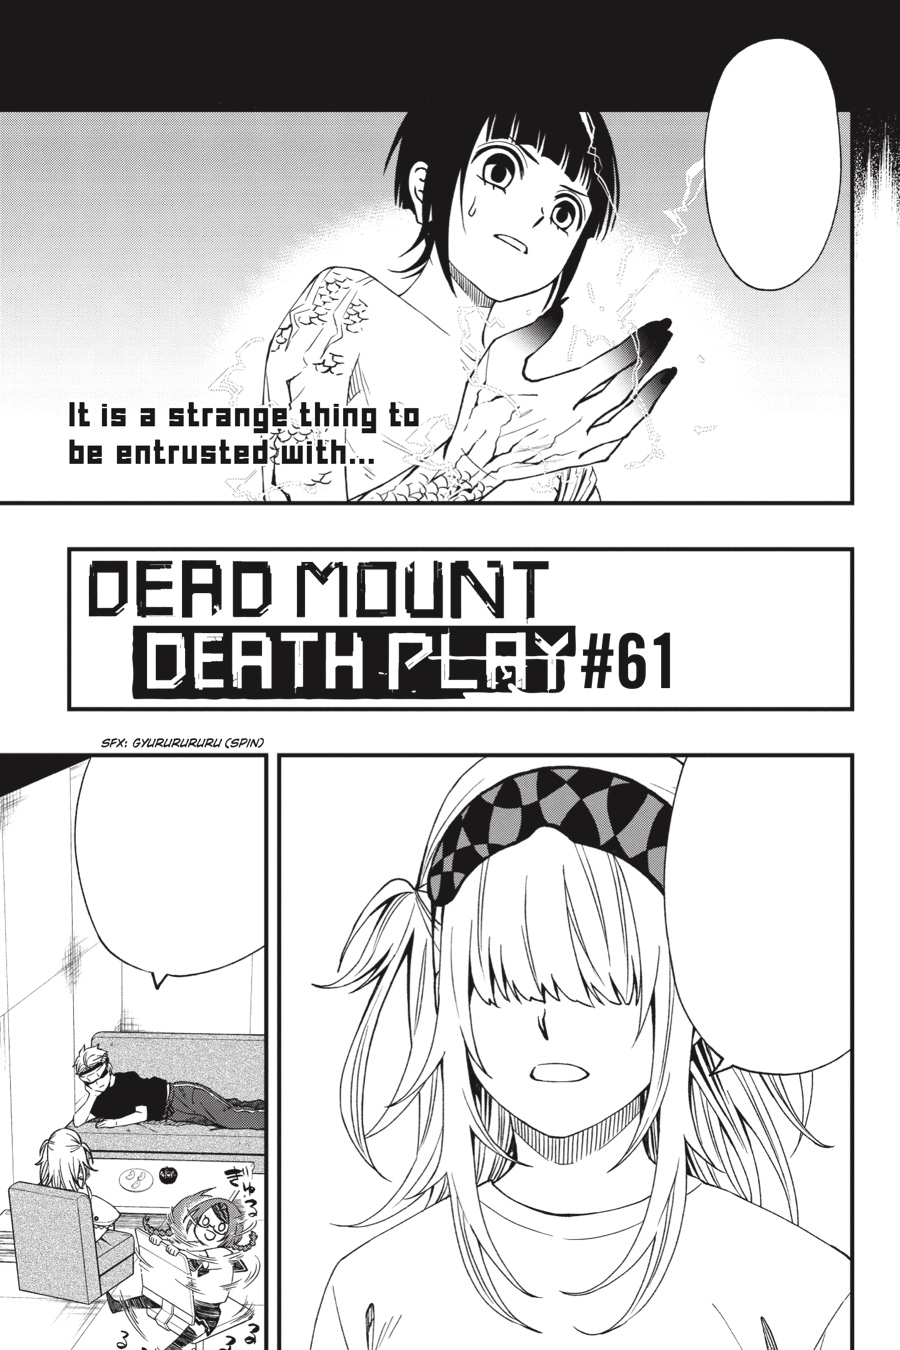 ART] Polka and Misaki (Dead Mount Death Play) : r/manga